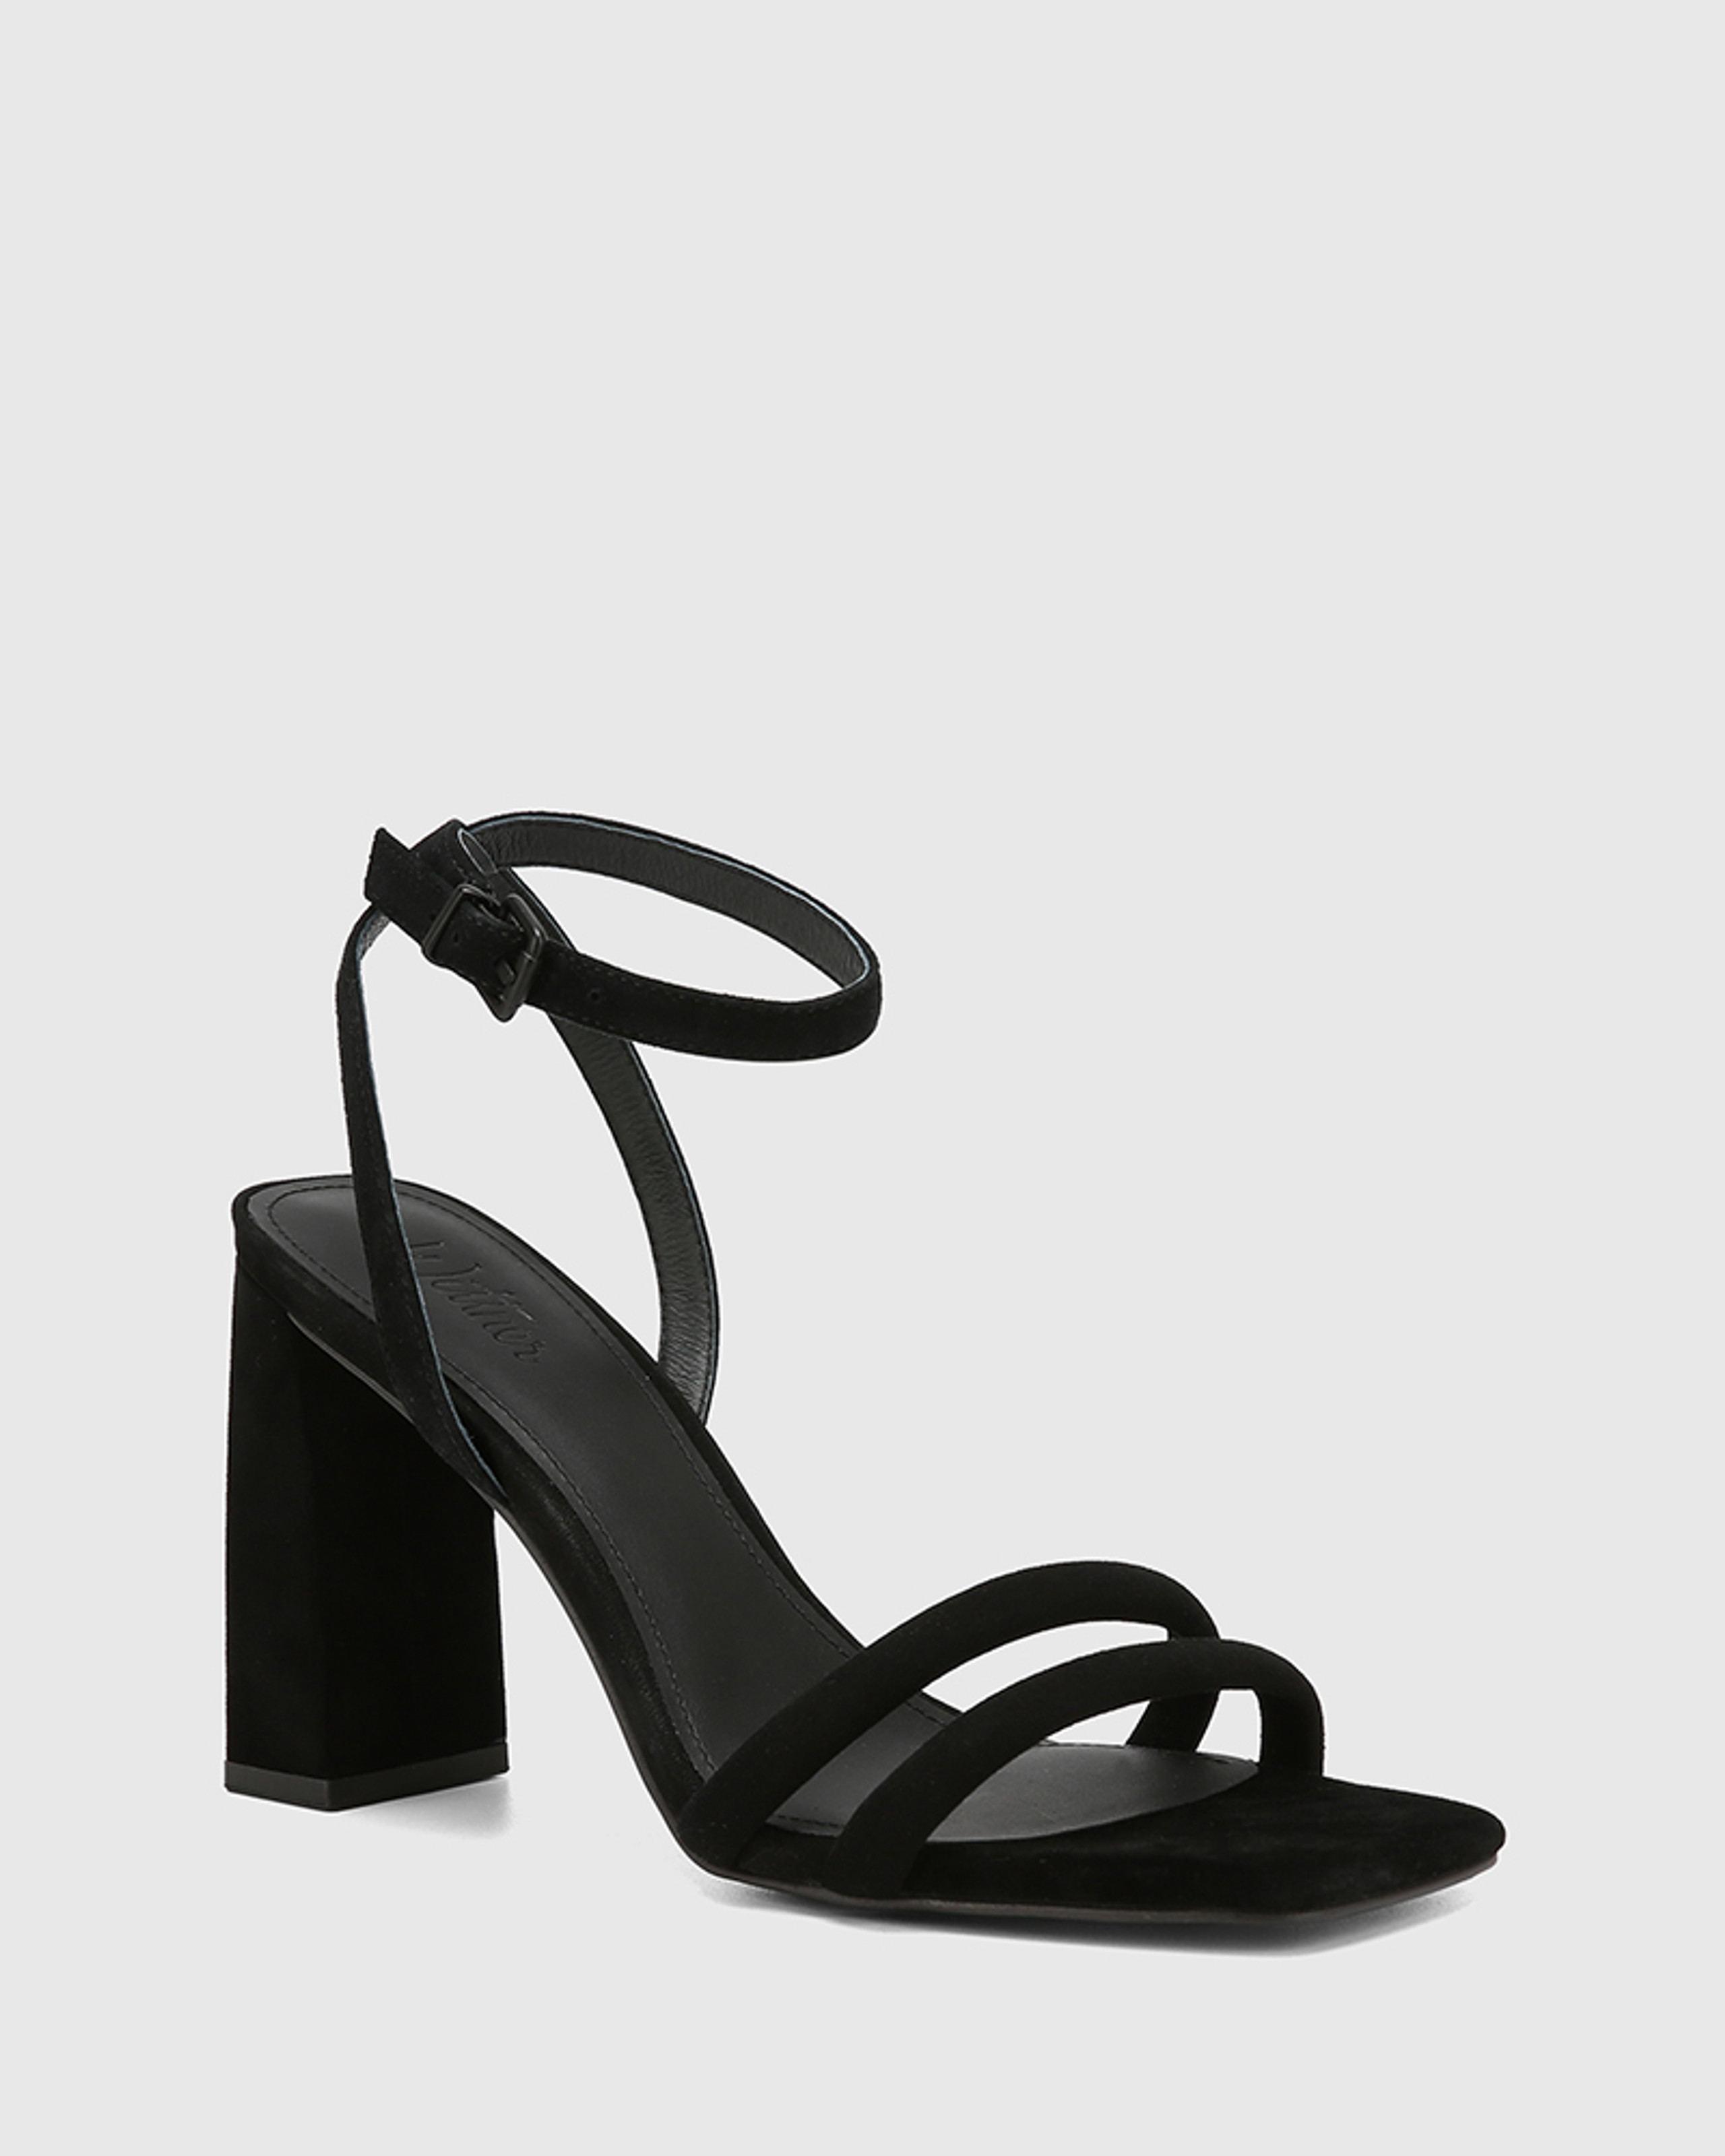 Rema Black Leather Block Heel Sandal